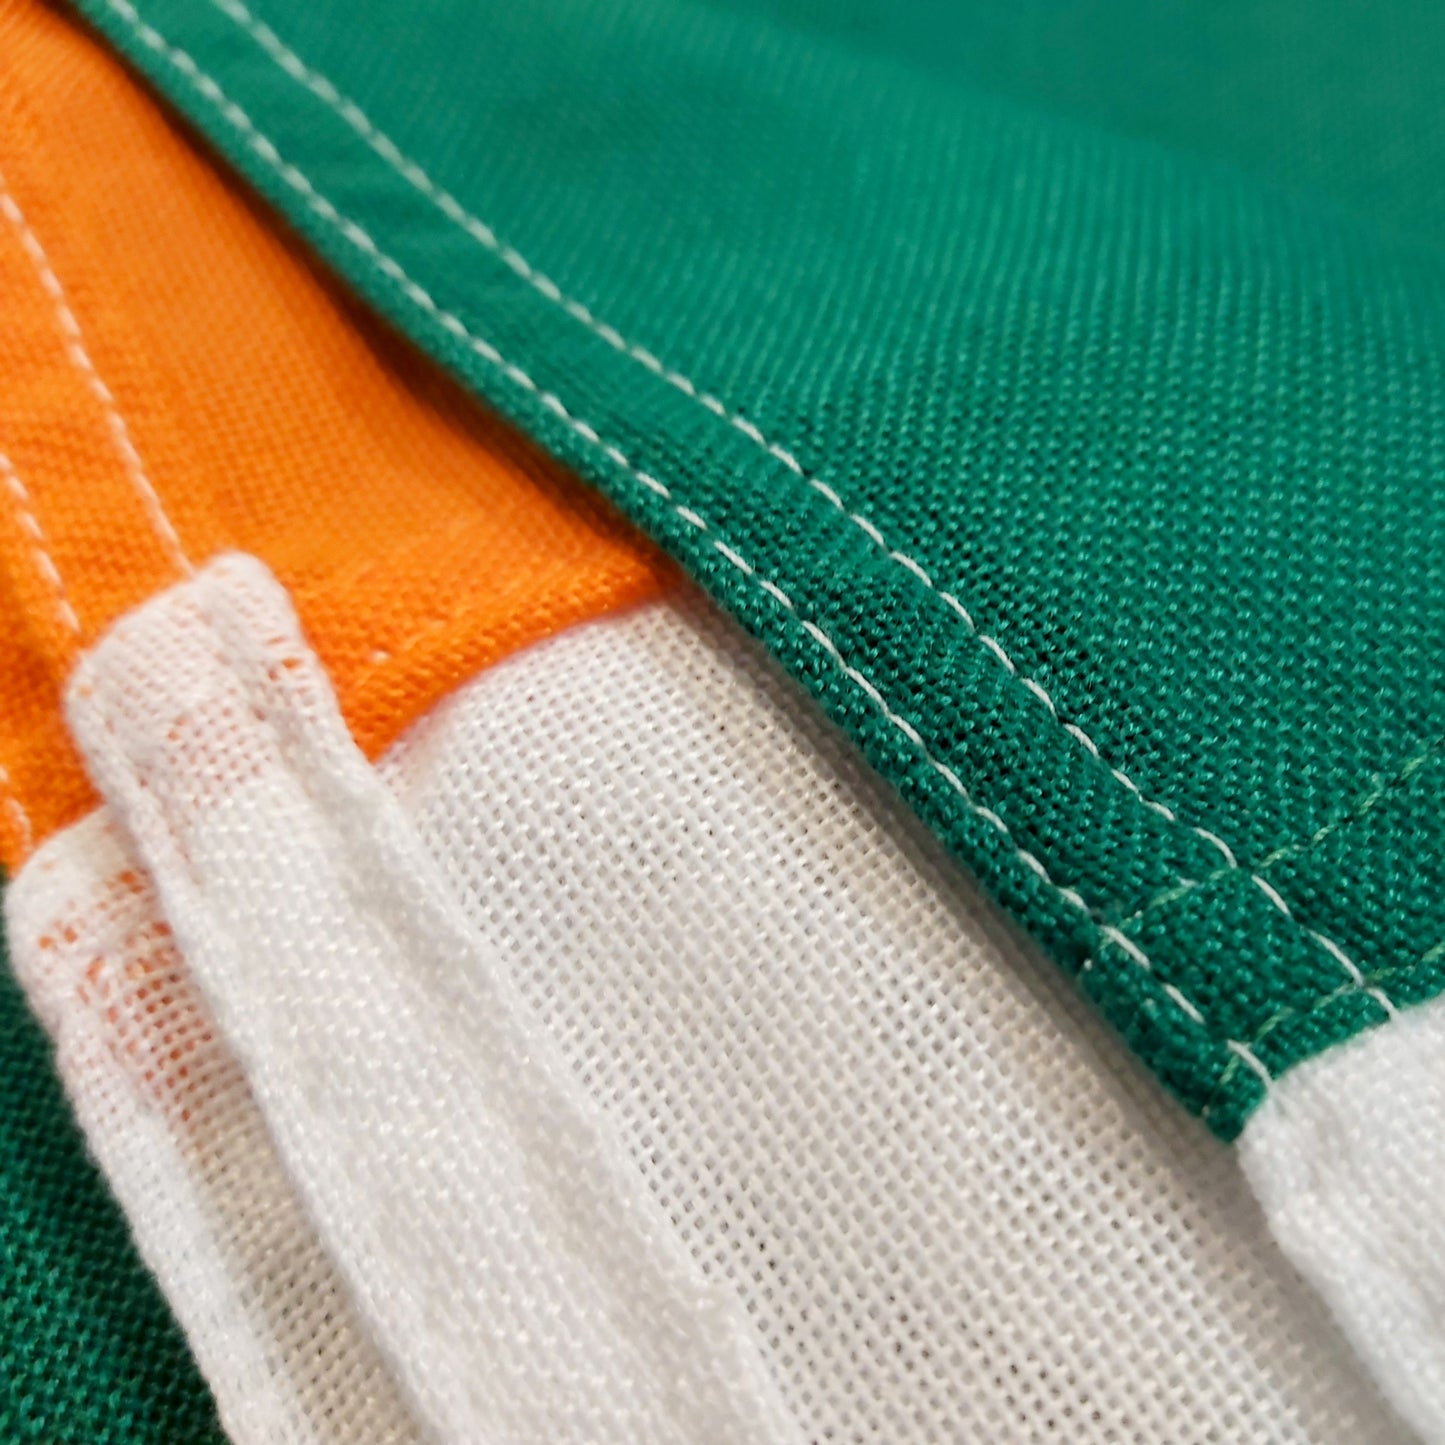 Irland-Nationalflagge